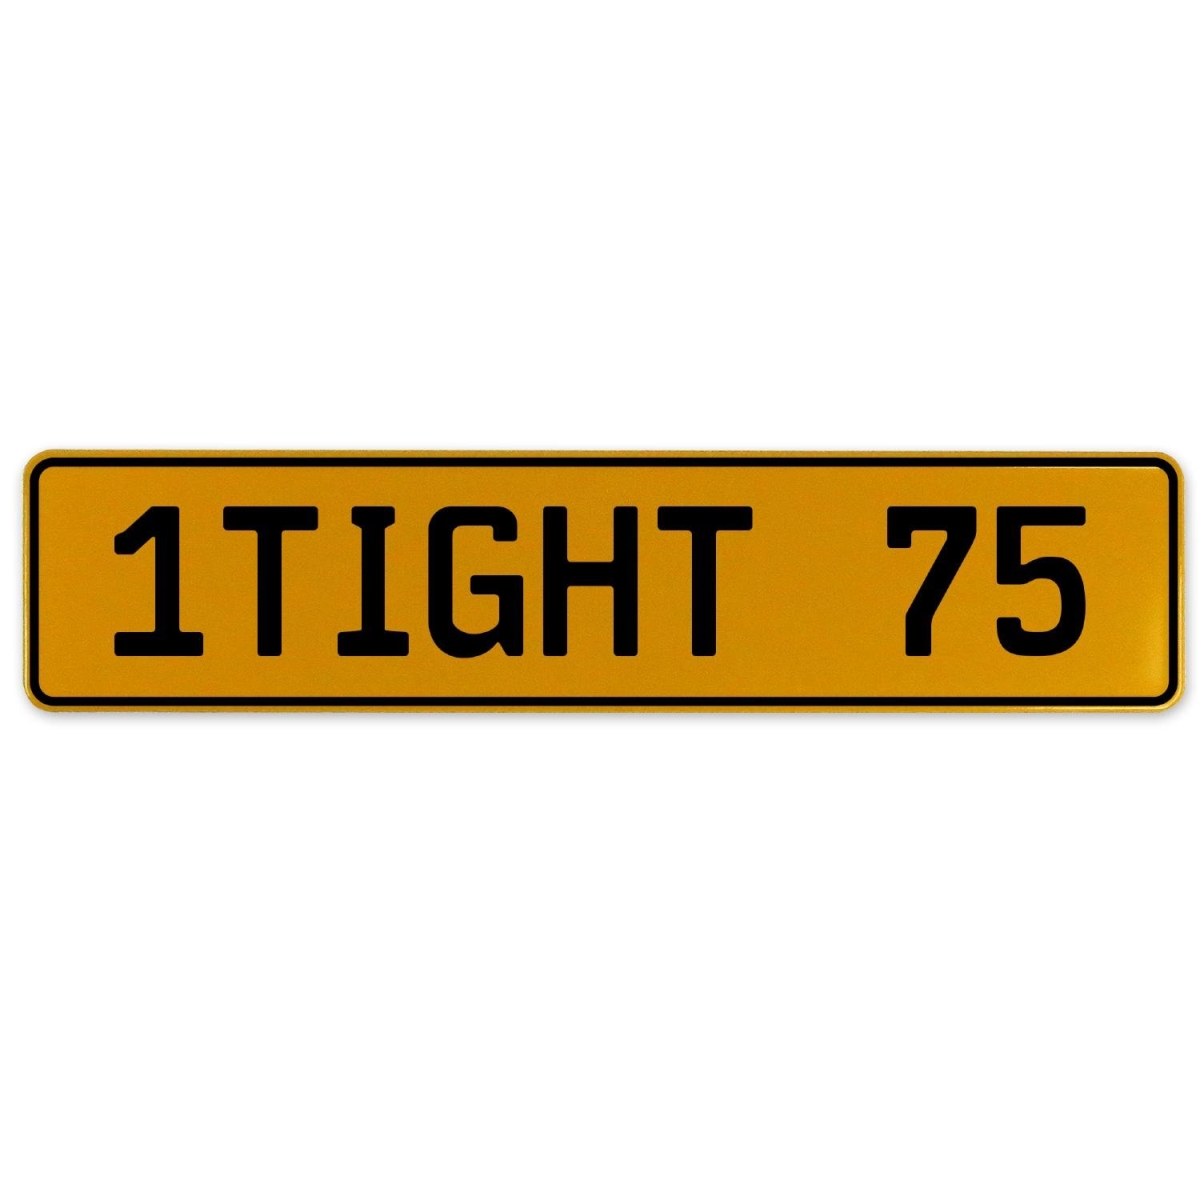 1tight 75 - Yellow Aluminum Street Sign Mancave Euro Plate Name Door Sign Wall